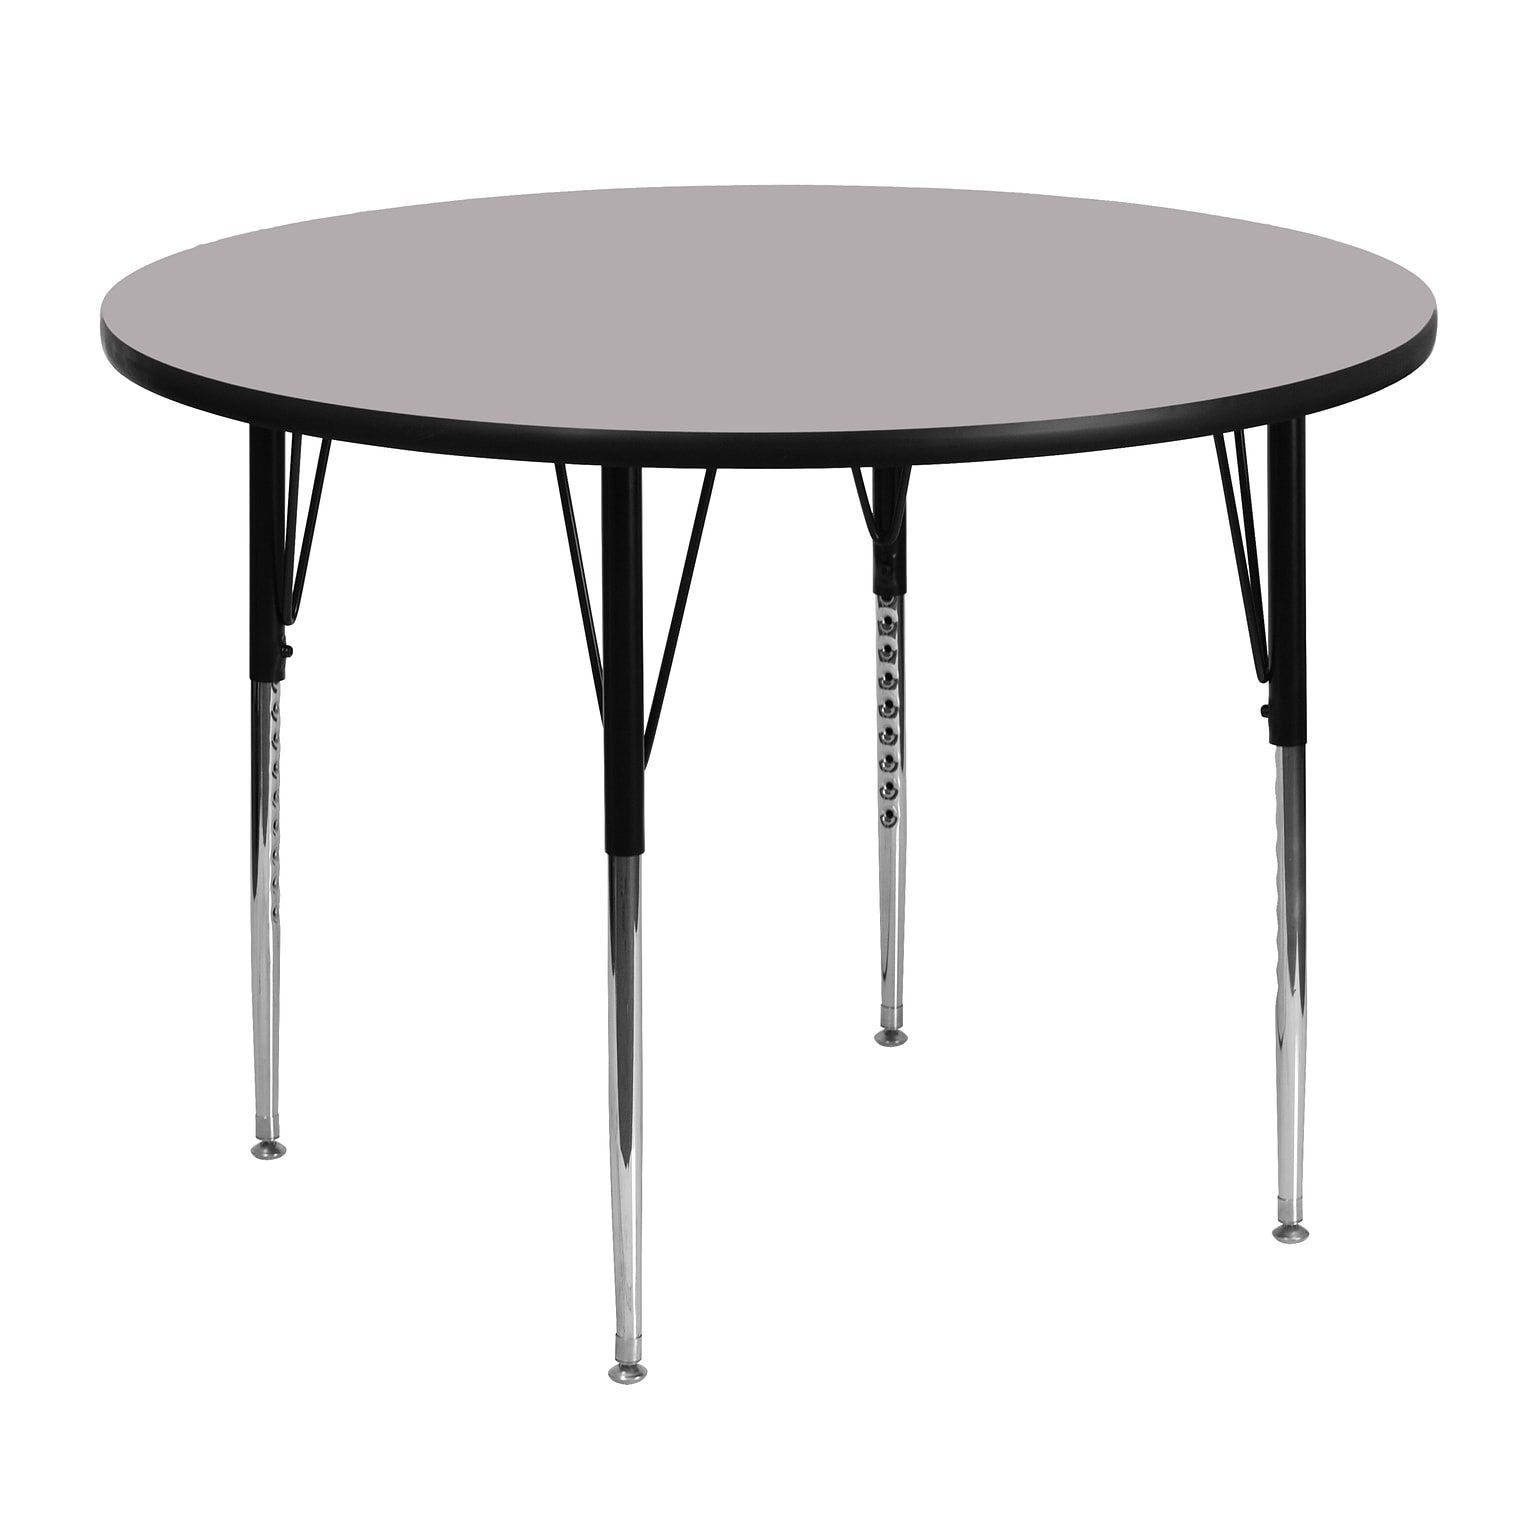 Belnick 21 1/8 - 30 1/8 H x 48 W x 48 D Steel Round Activity Table, Gray